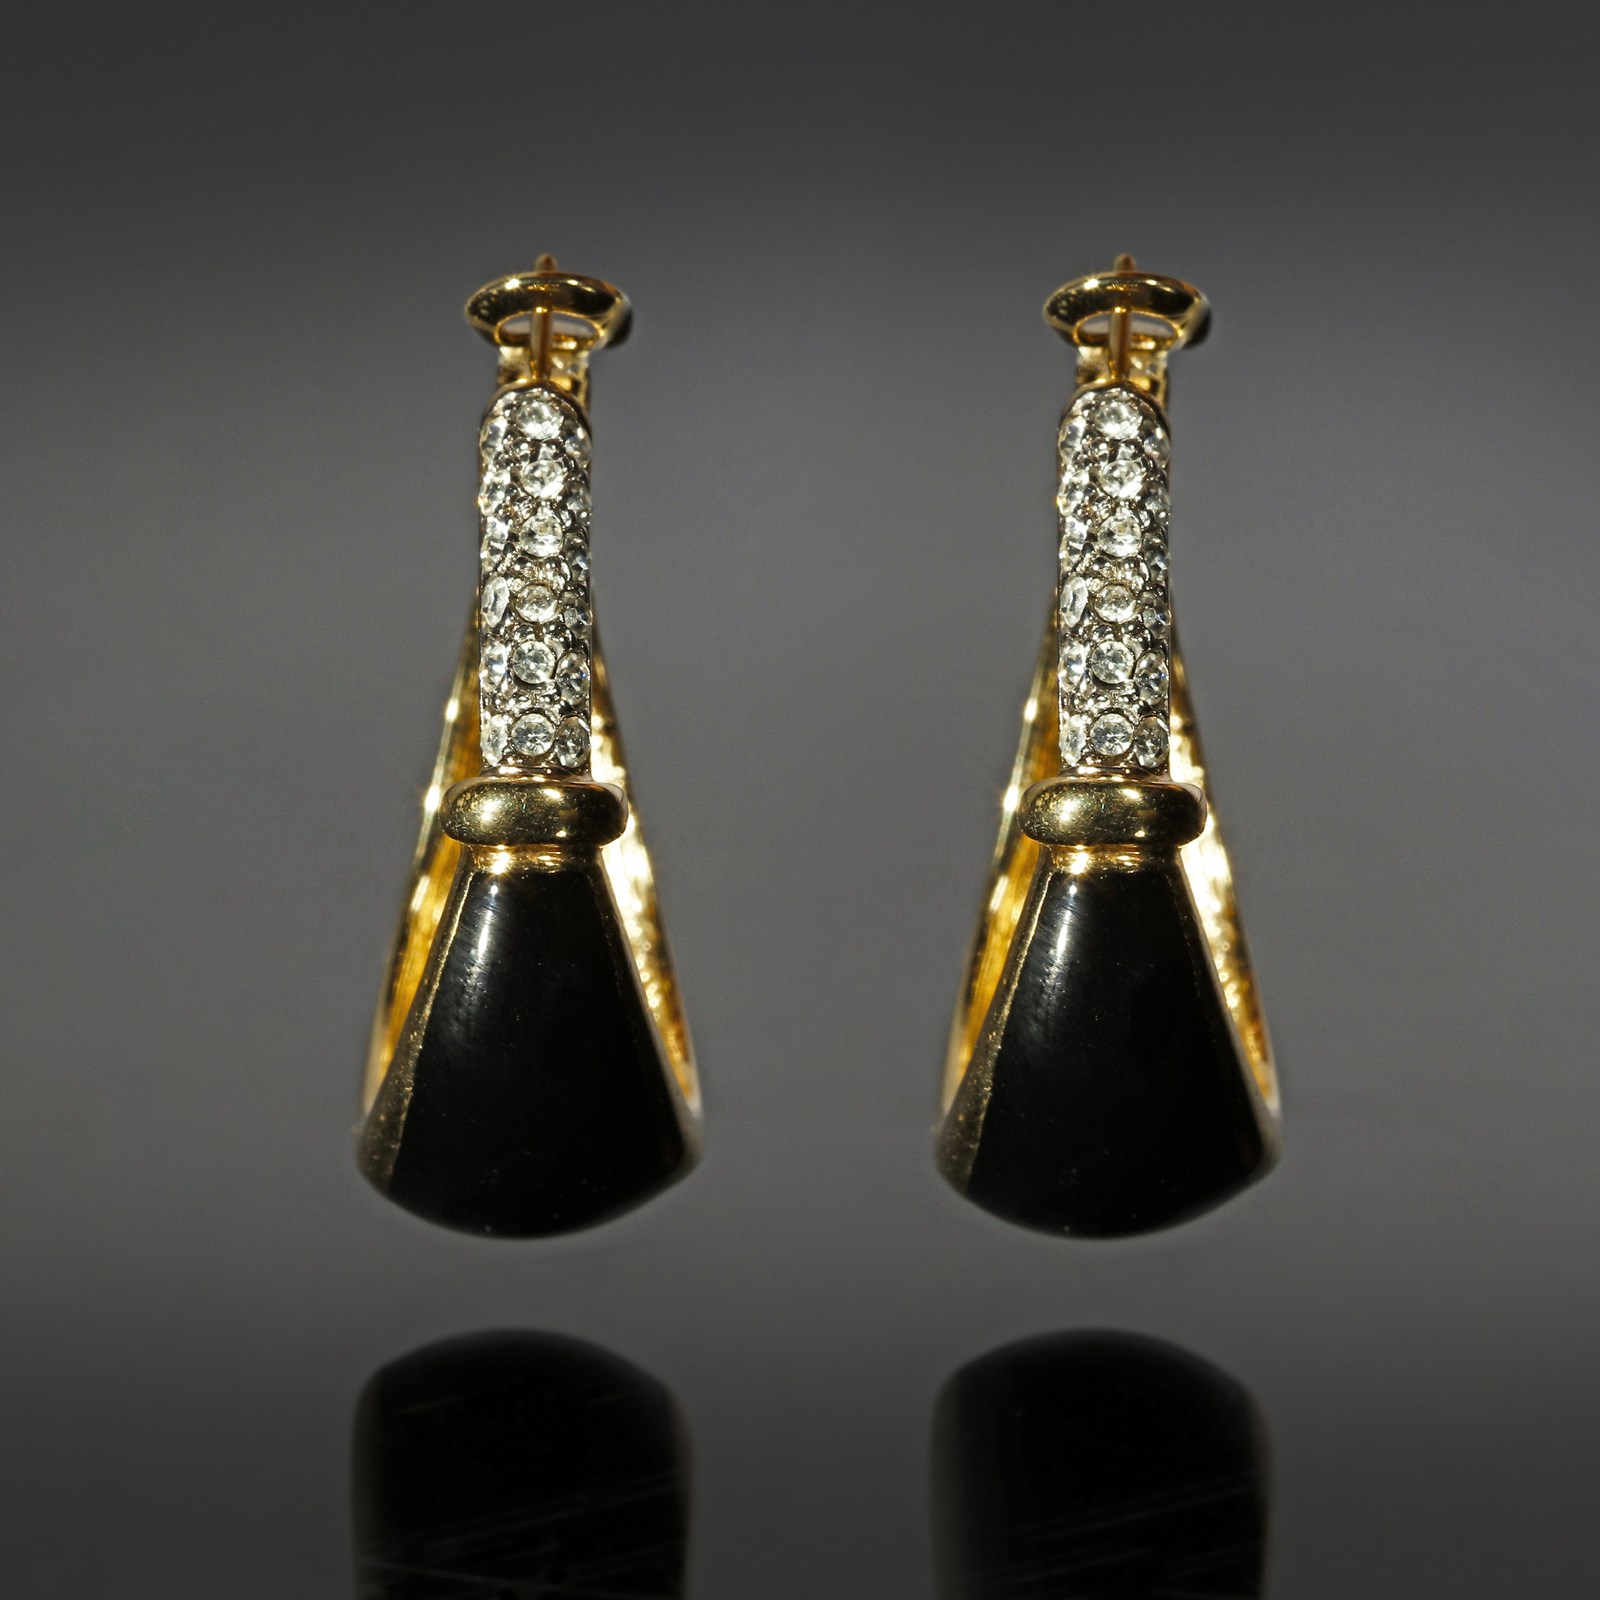 Circle pierced earrings with black enamel and rhinestones, golden metal. (Autore Non Identificato  )